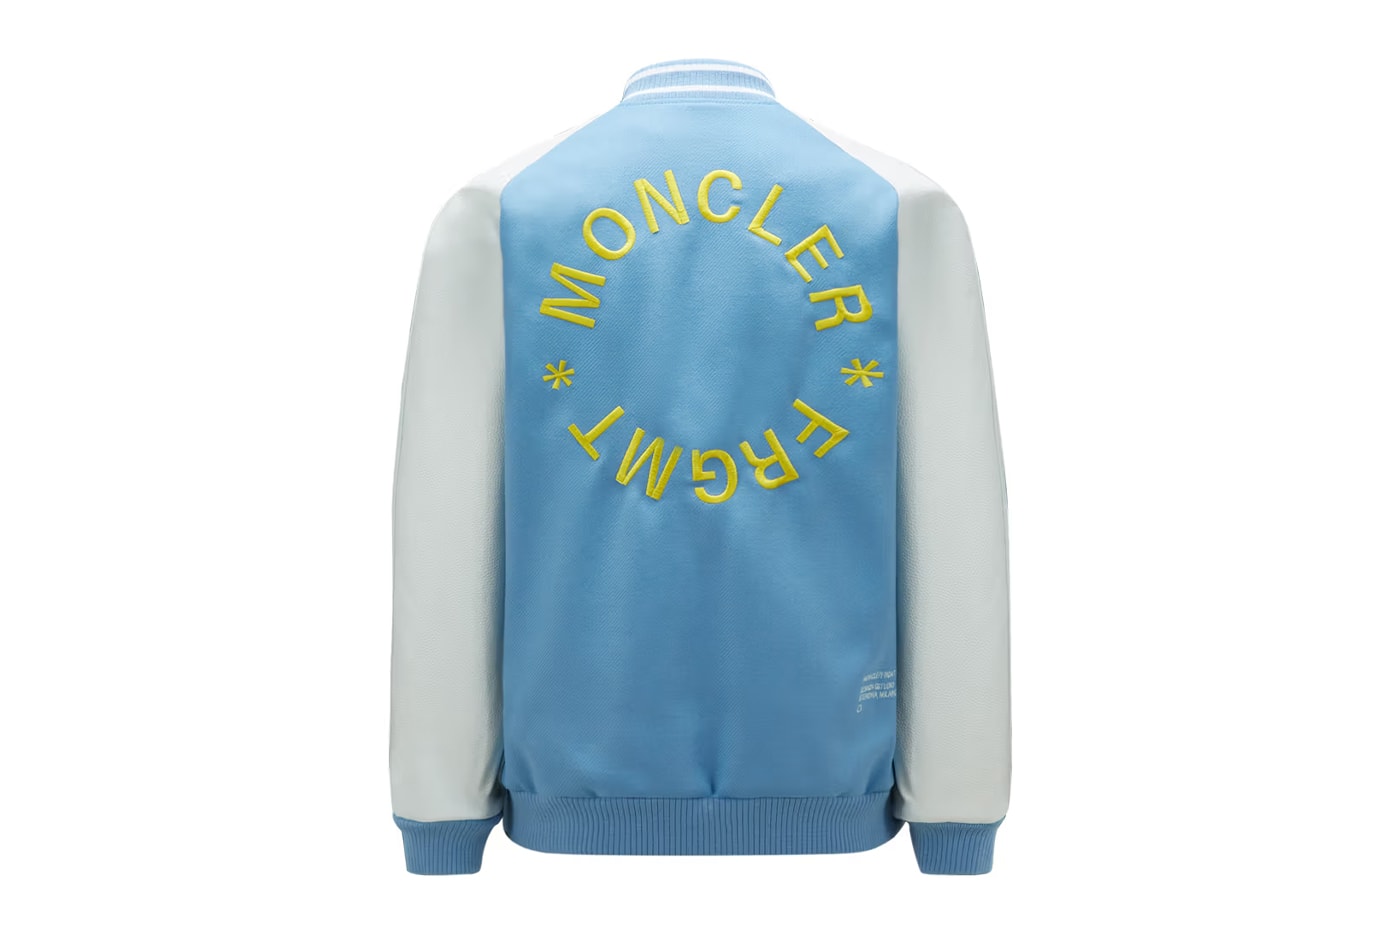 Moncler x FRGMT Varsity Jacket Closer Look Details Shop Buy Now Order Hiroshi Fujiwara 